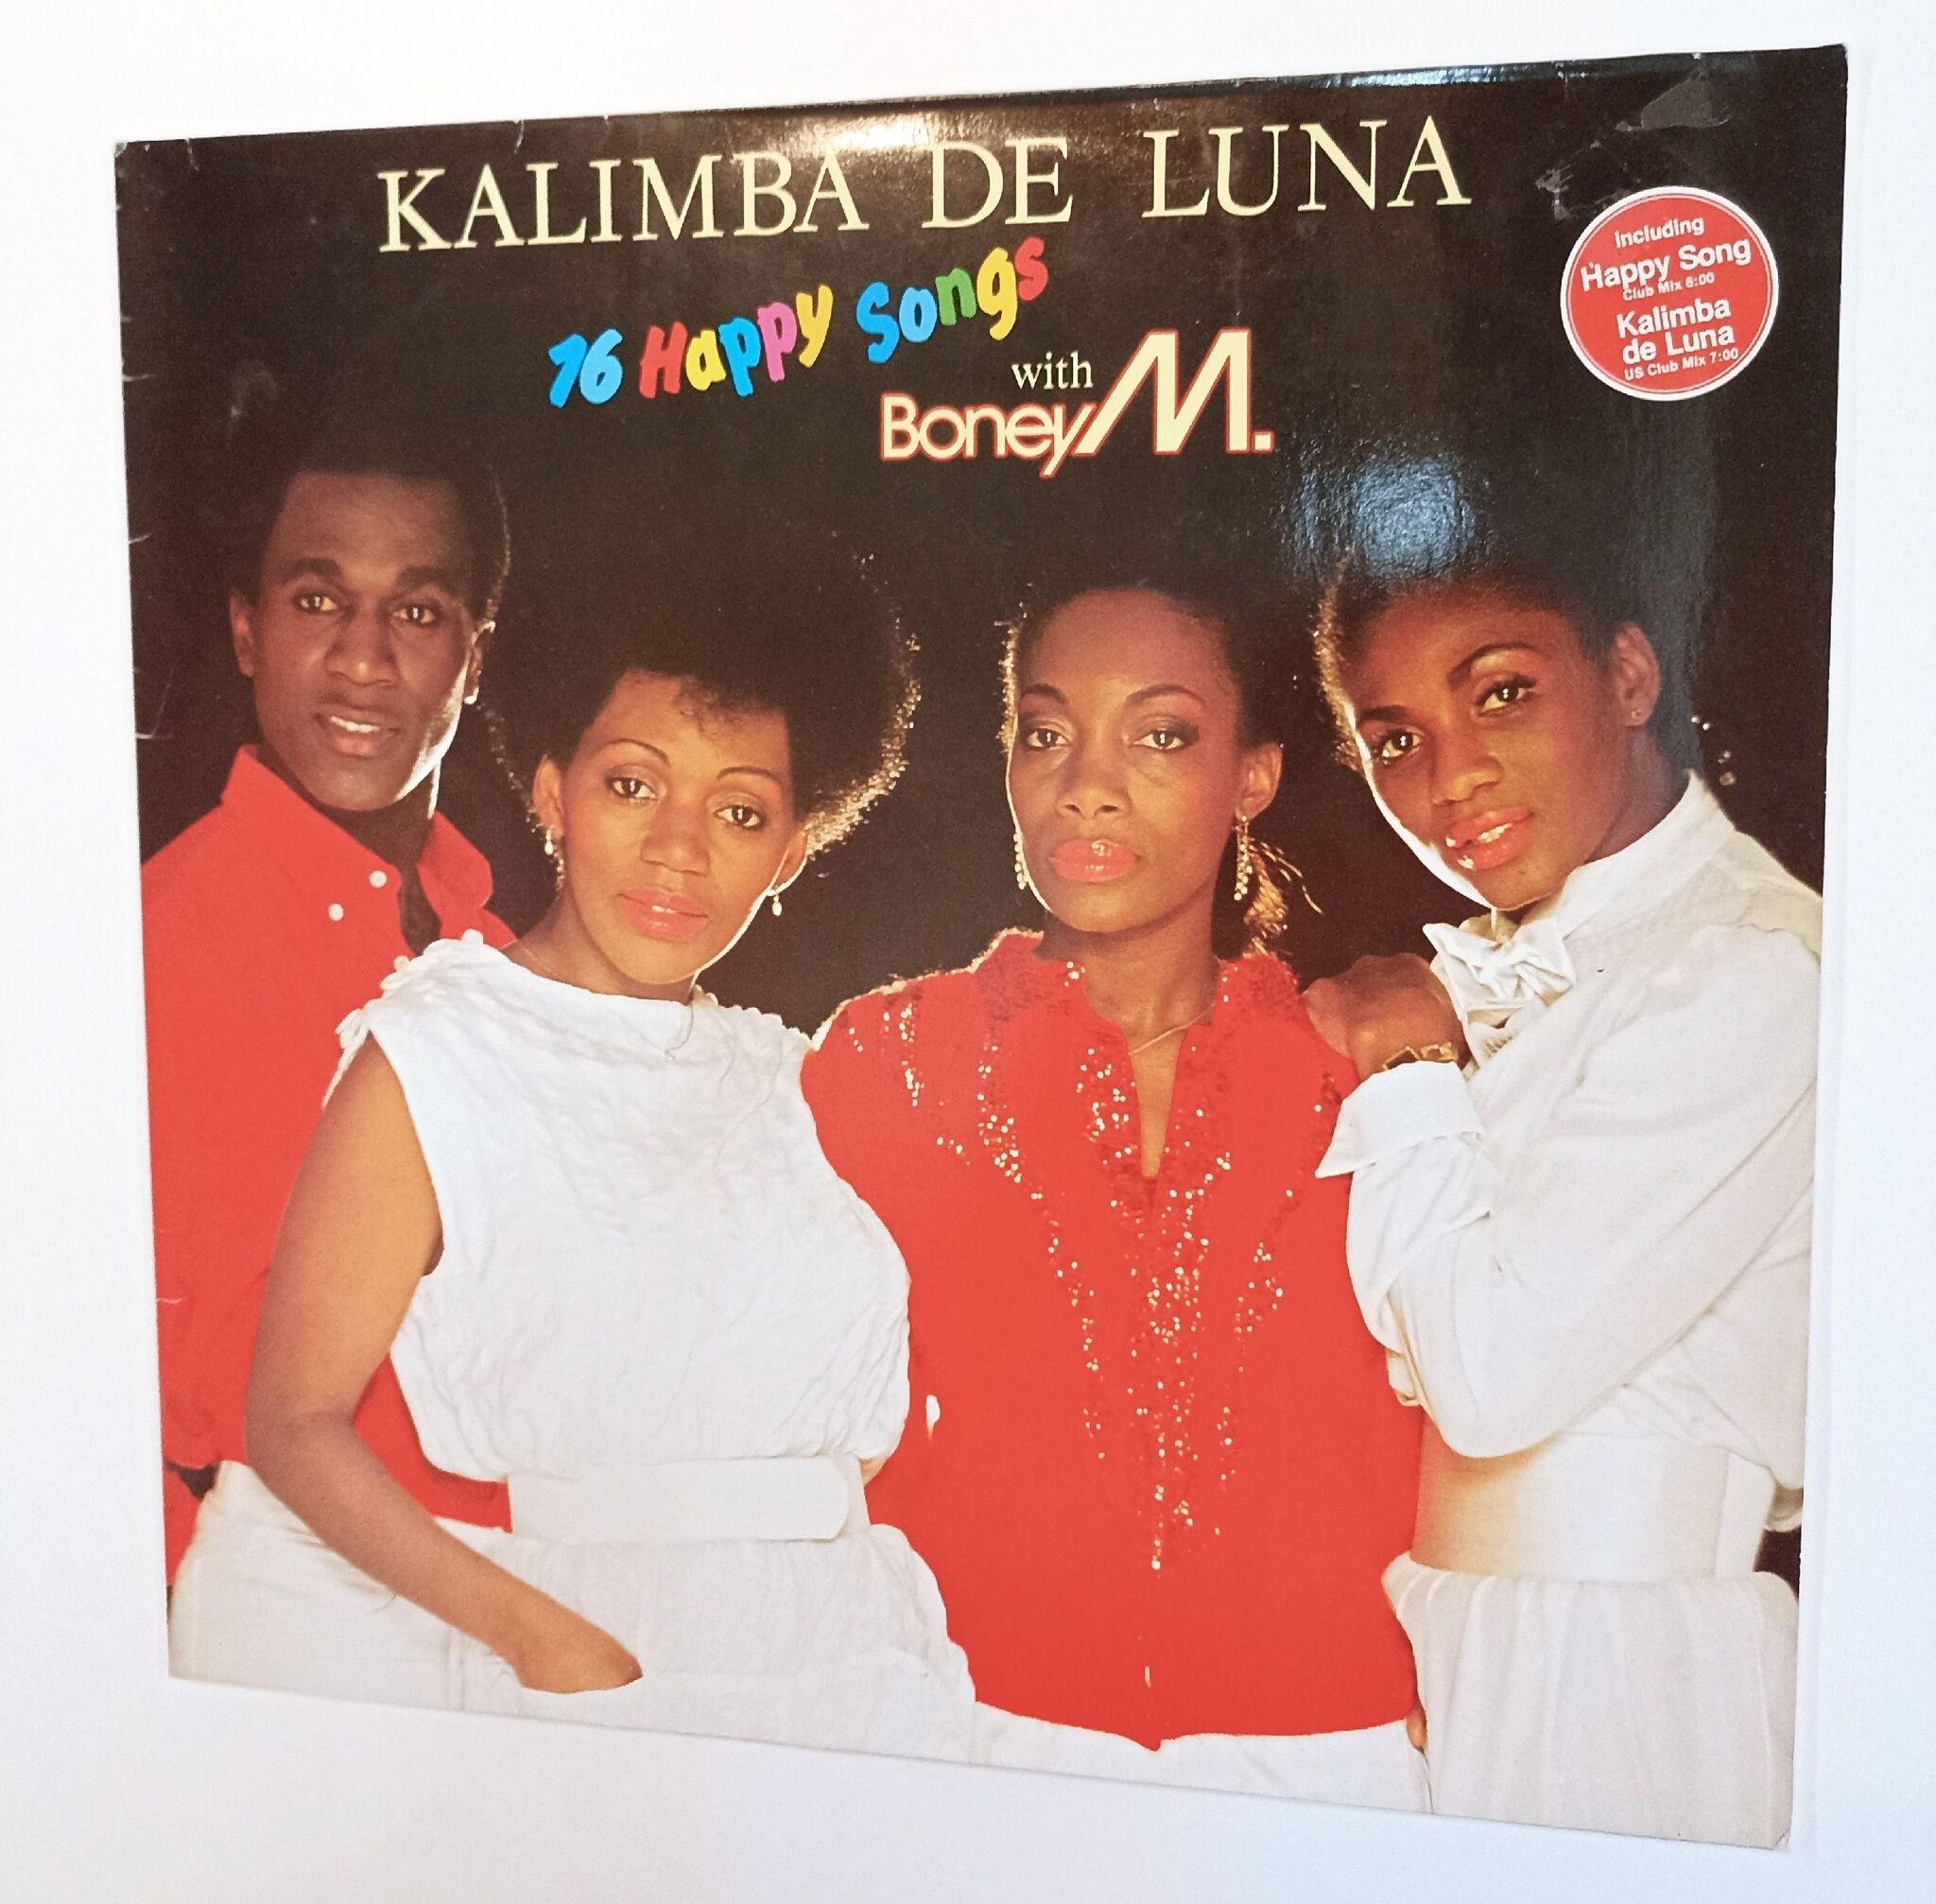 Boney m kalimba. Boney m "Kalimba de Luna". Kalimba de Luna – 16 Happy Songs Boney m.. Kalimba de Luna – 16 Happy Songs Boney m. сони Рекордс. Boney m Kalimba de Luna фото.